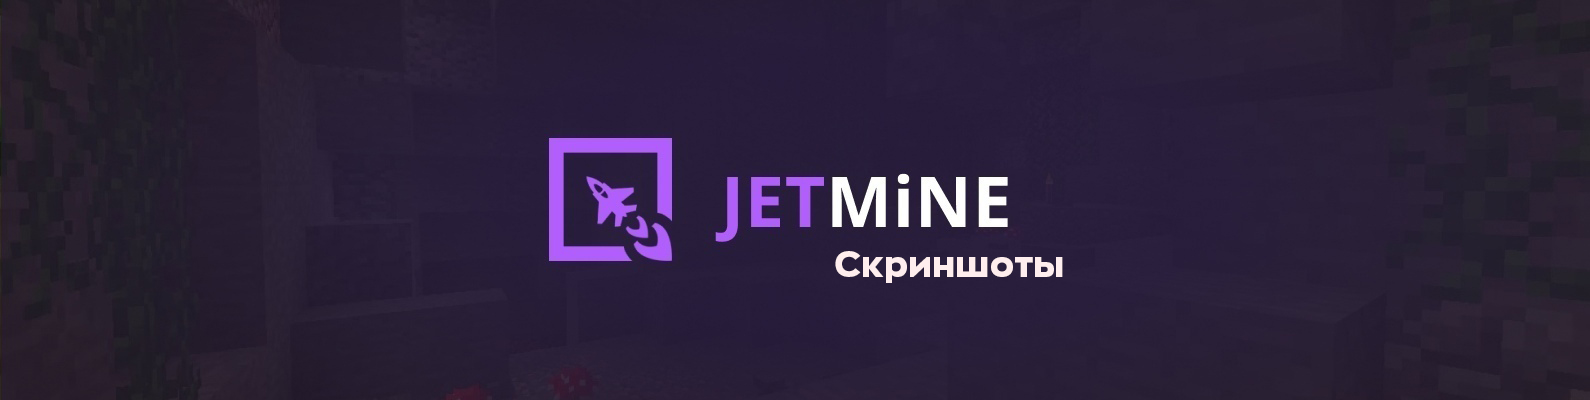 JetMine_logo_2.jpg